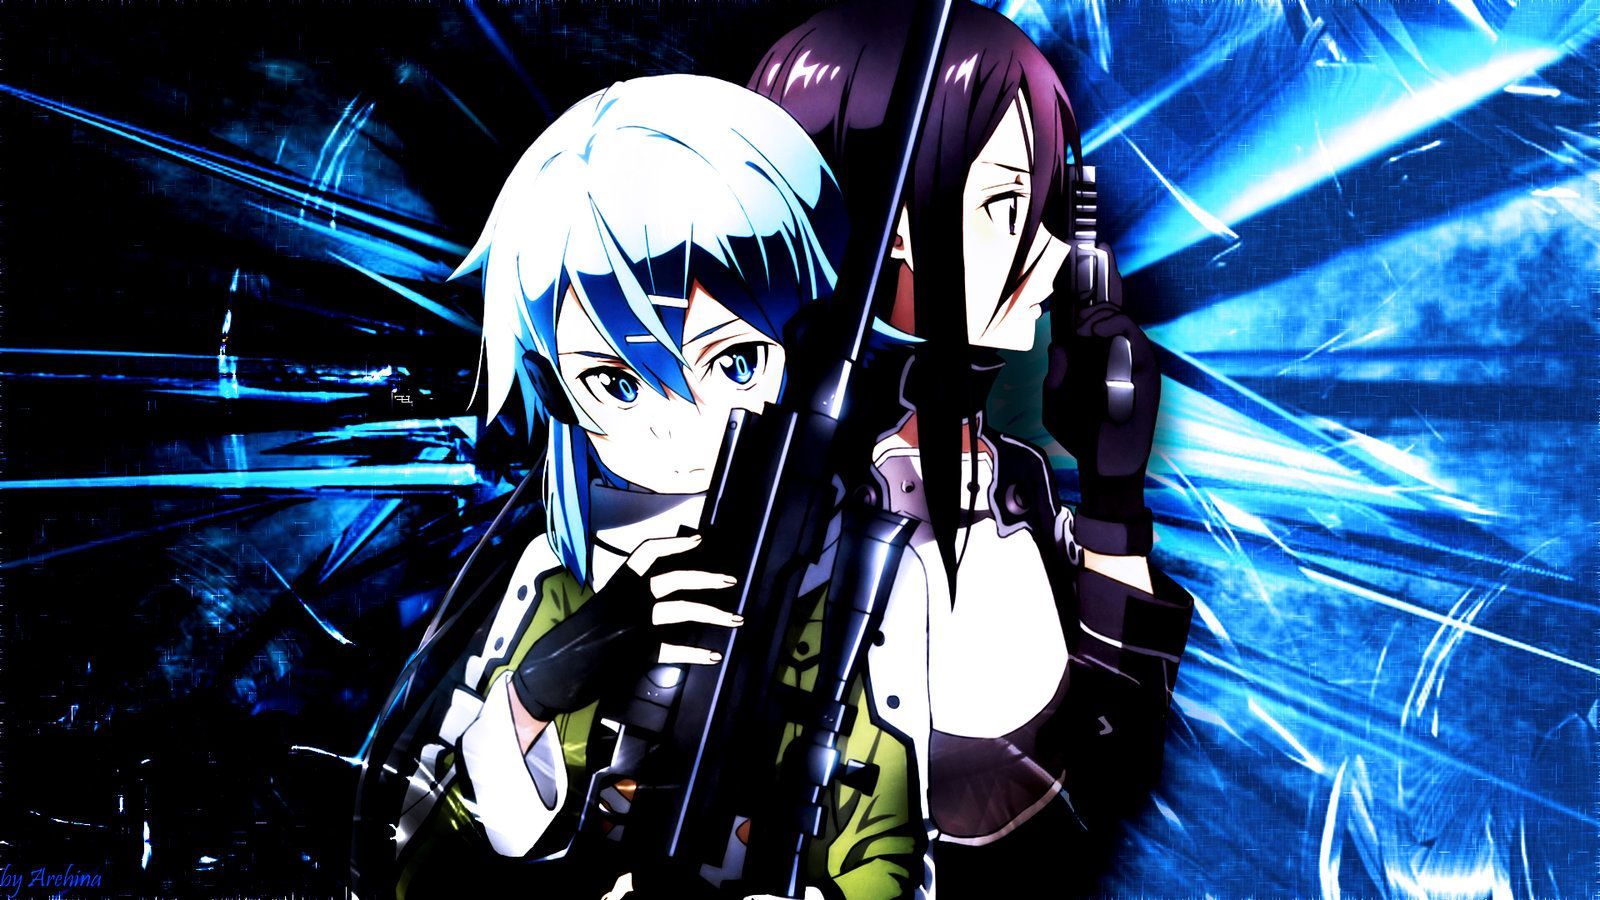 Anime Sword Art Online II HD Wallpaper